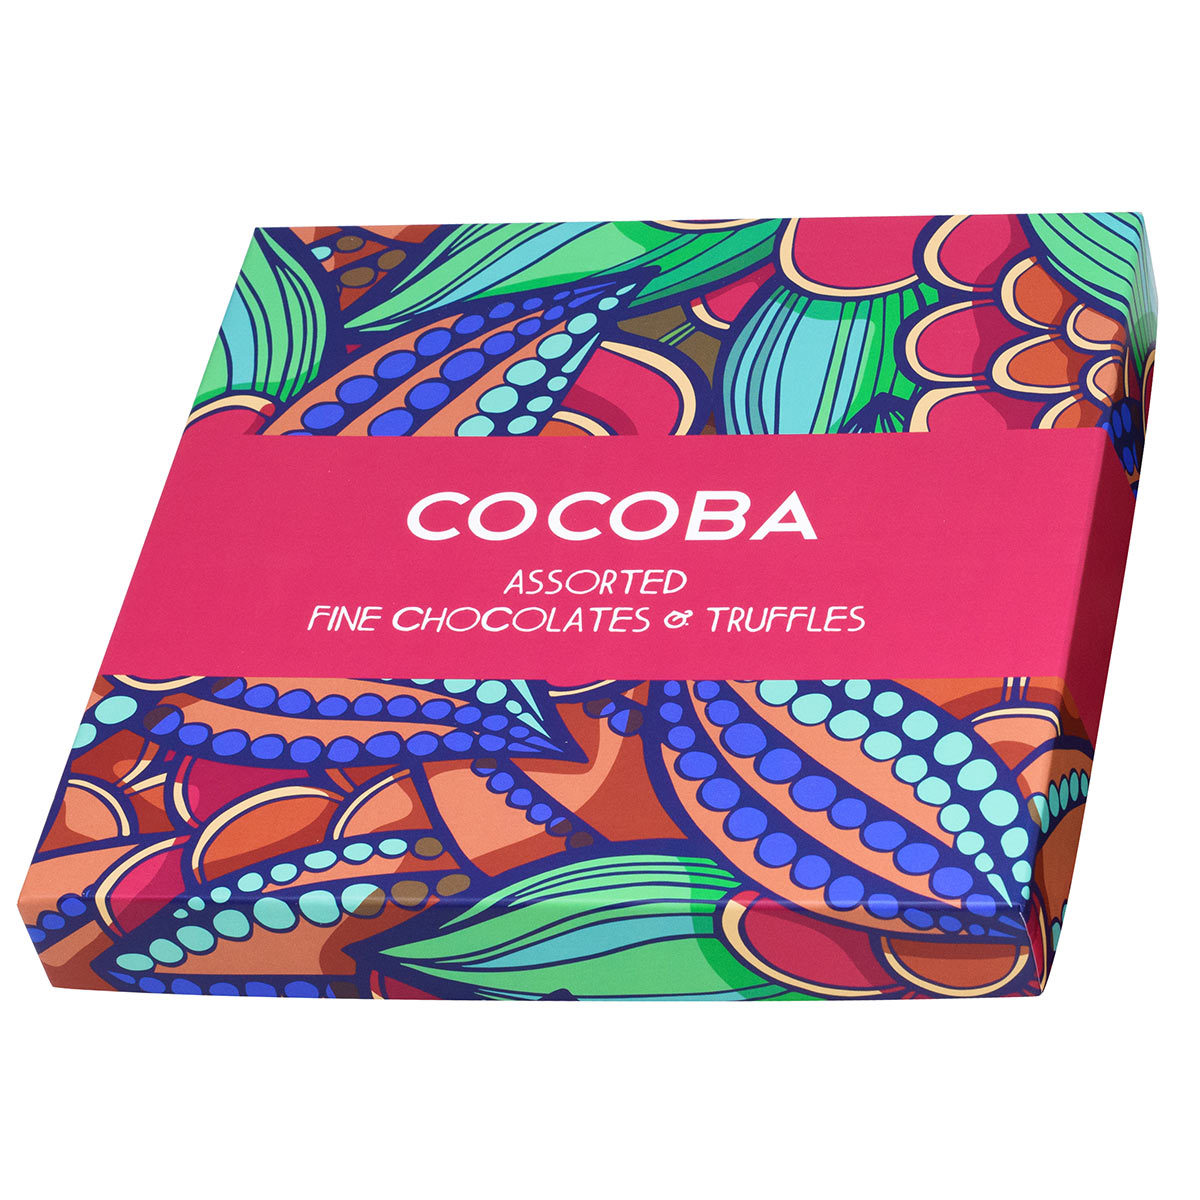 Cocoba 25 Assorted Chocolates & Truffles, 350g